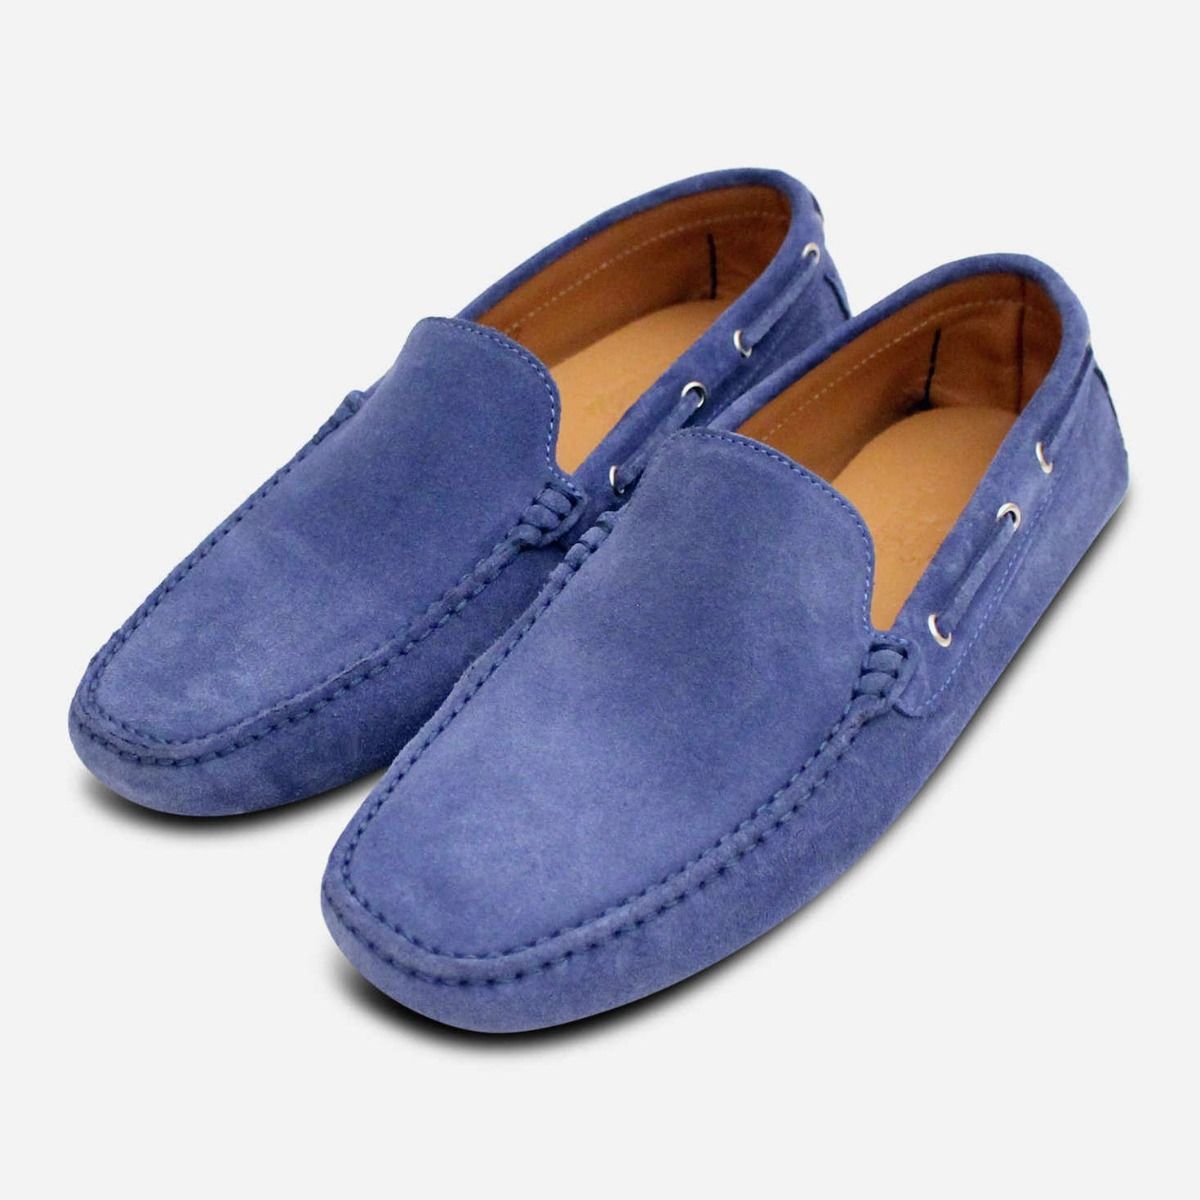 Blue Denim Jeans Suede Shoes by Arthur Knight